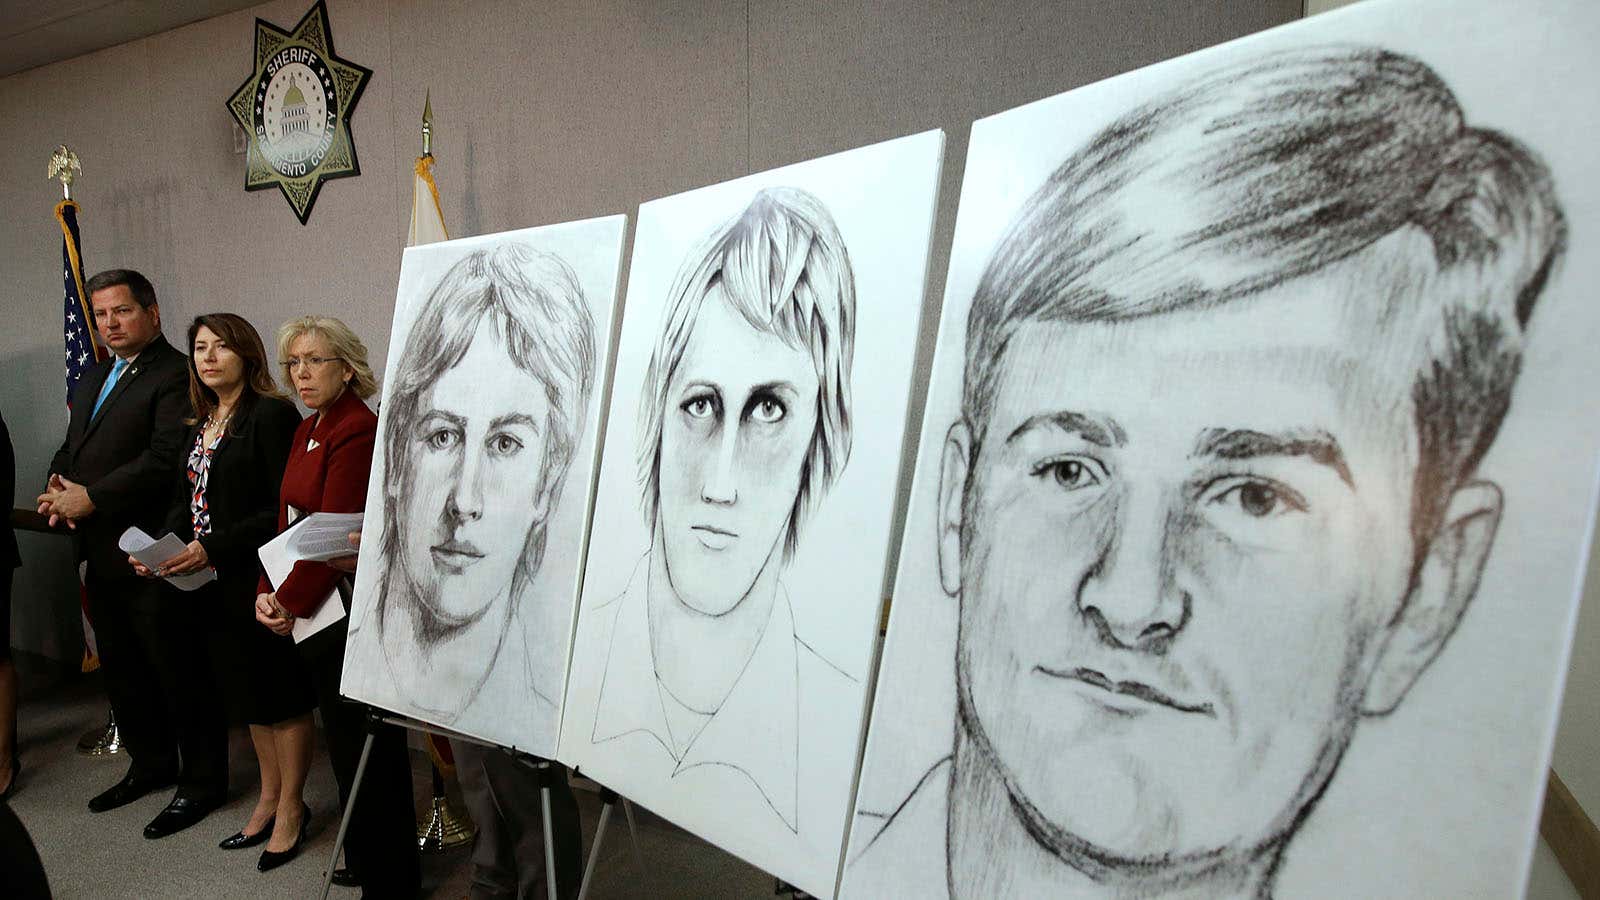 Drawings of the suspected serial killer.